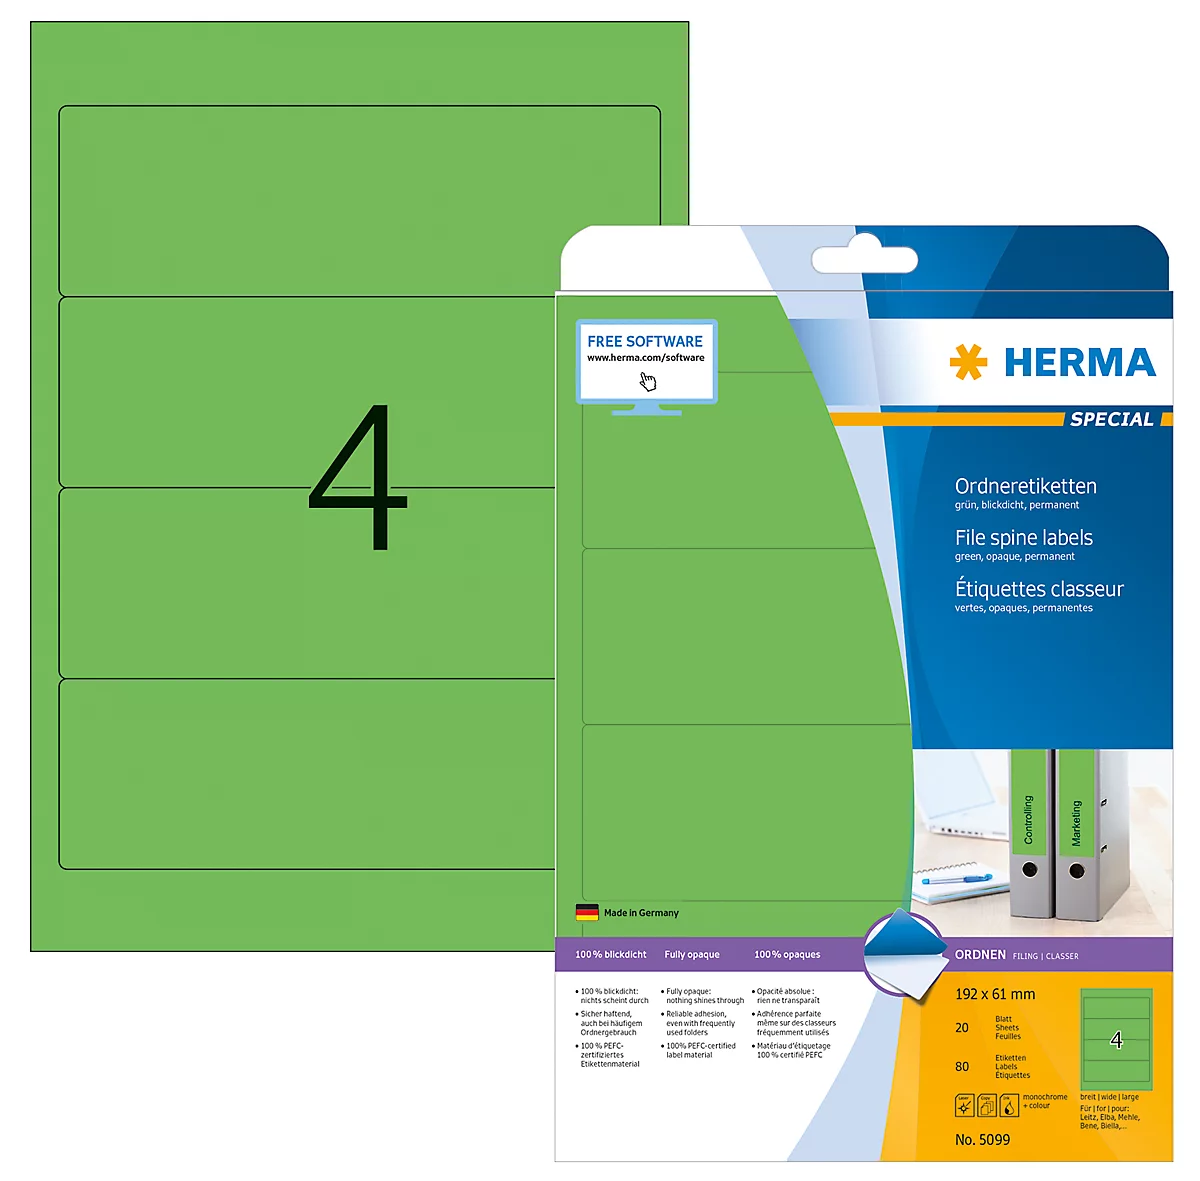 Herma Ordneretiketten A4, 192 x 61 mm, permanent haftend/bedruckbar, 80 Stück, grün